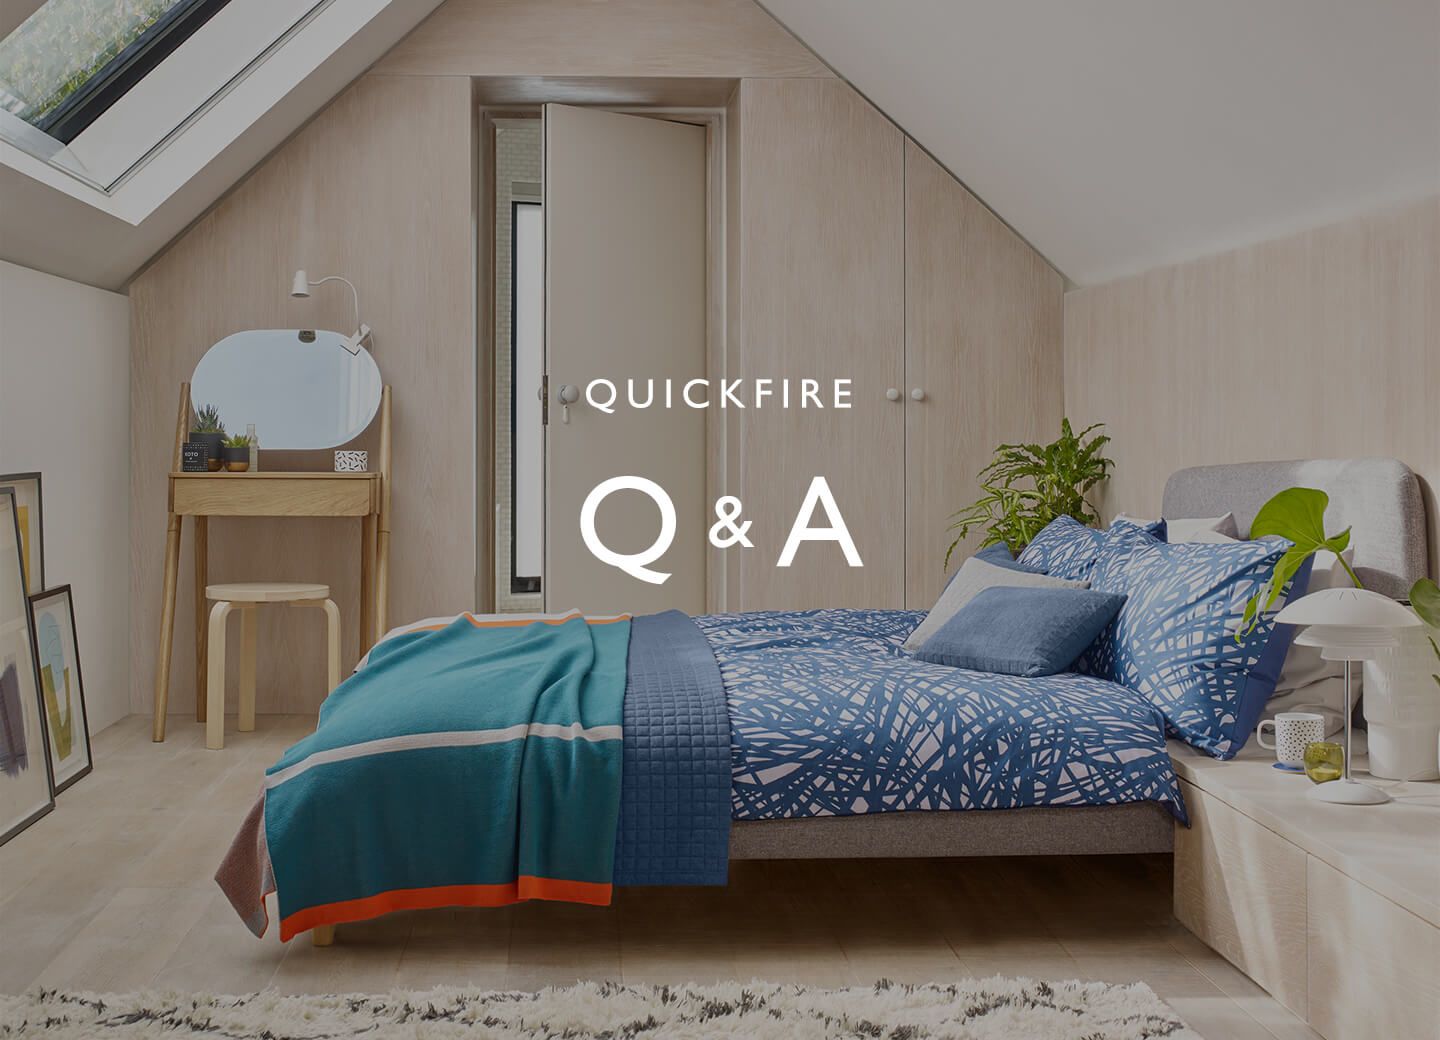 Quickfire Q&A, House by John Lewis